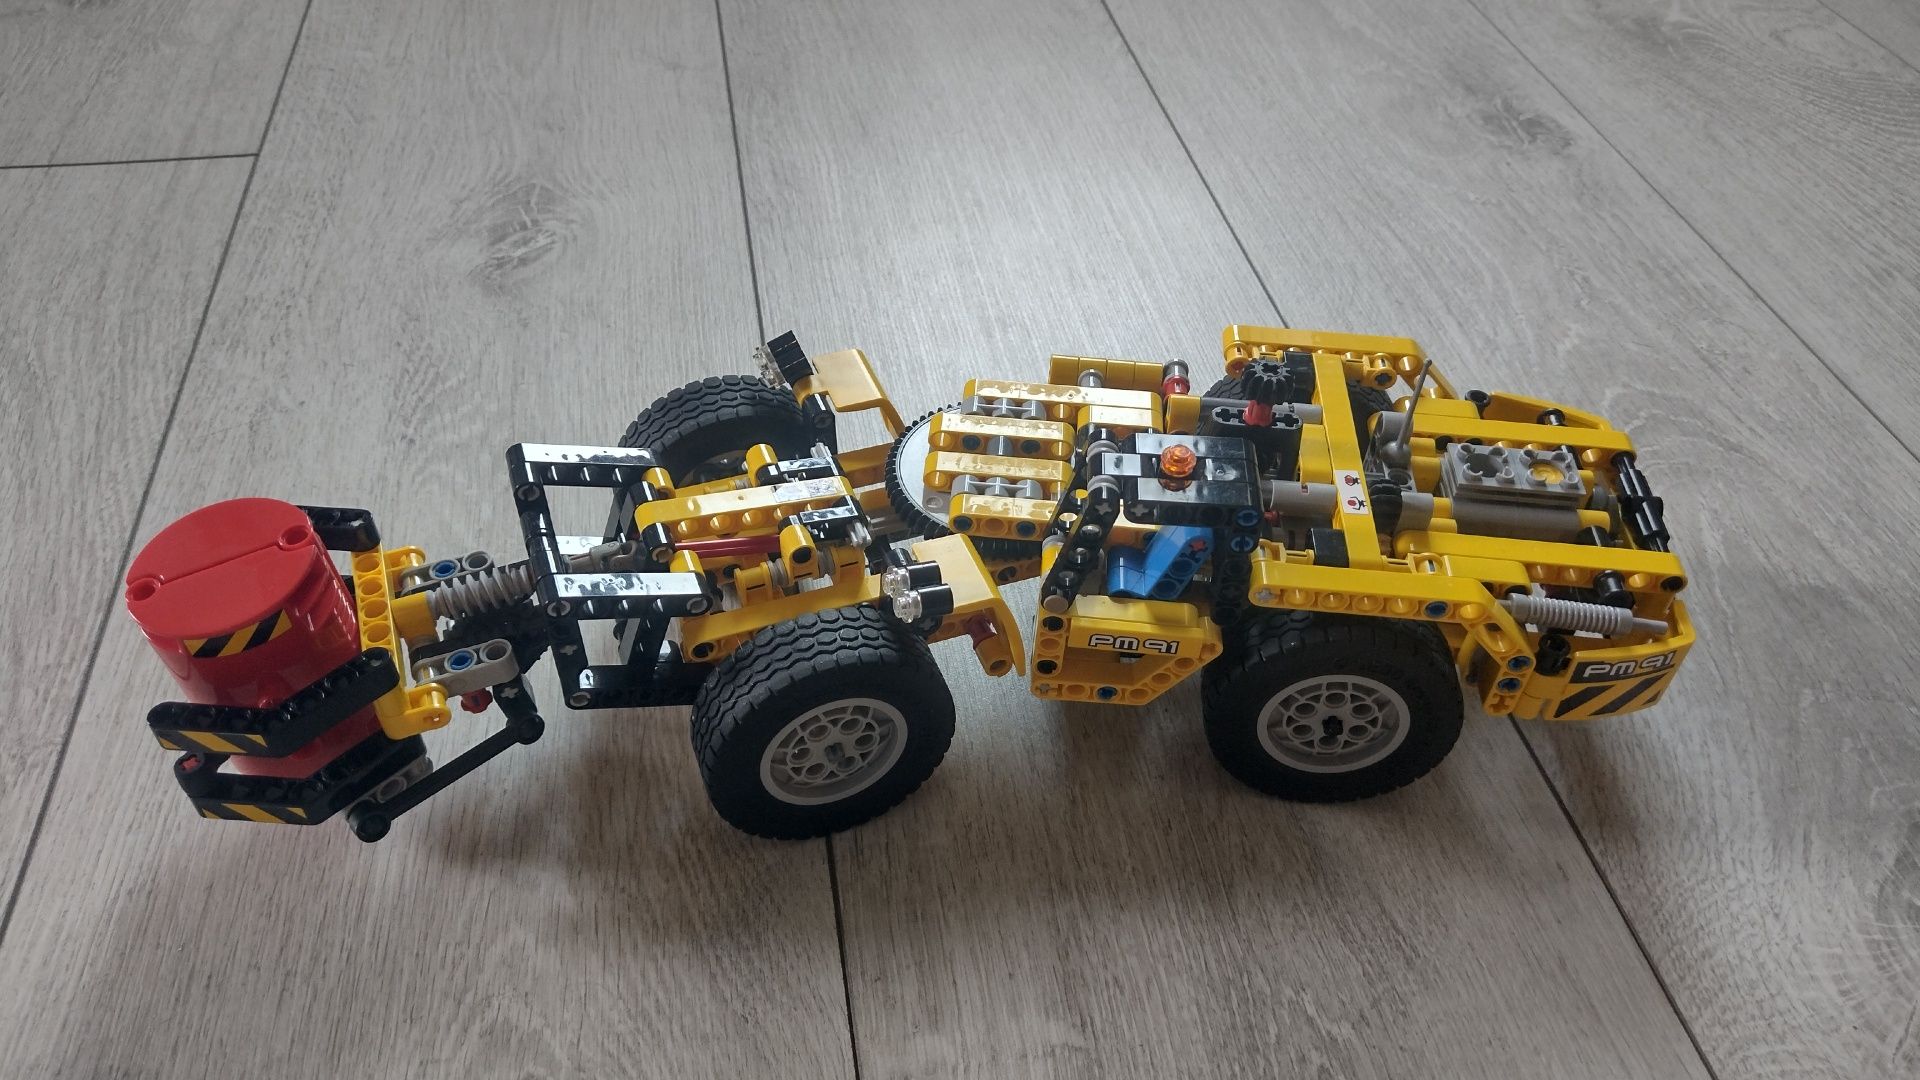 Lego tehnic Utilitara 2 in 1 cod 42049